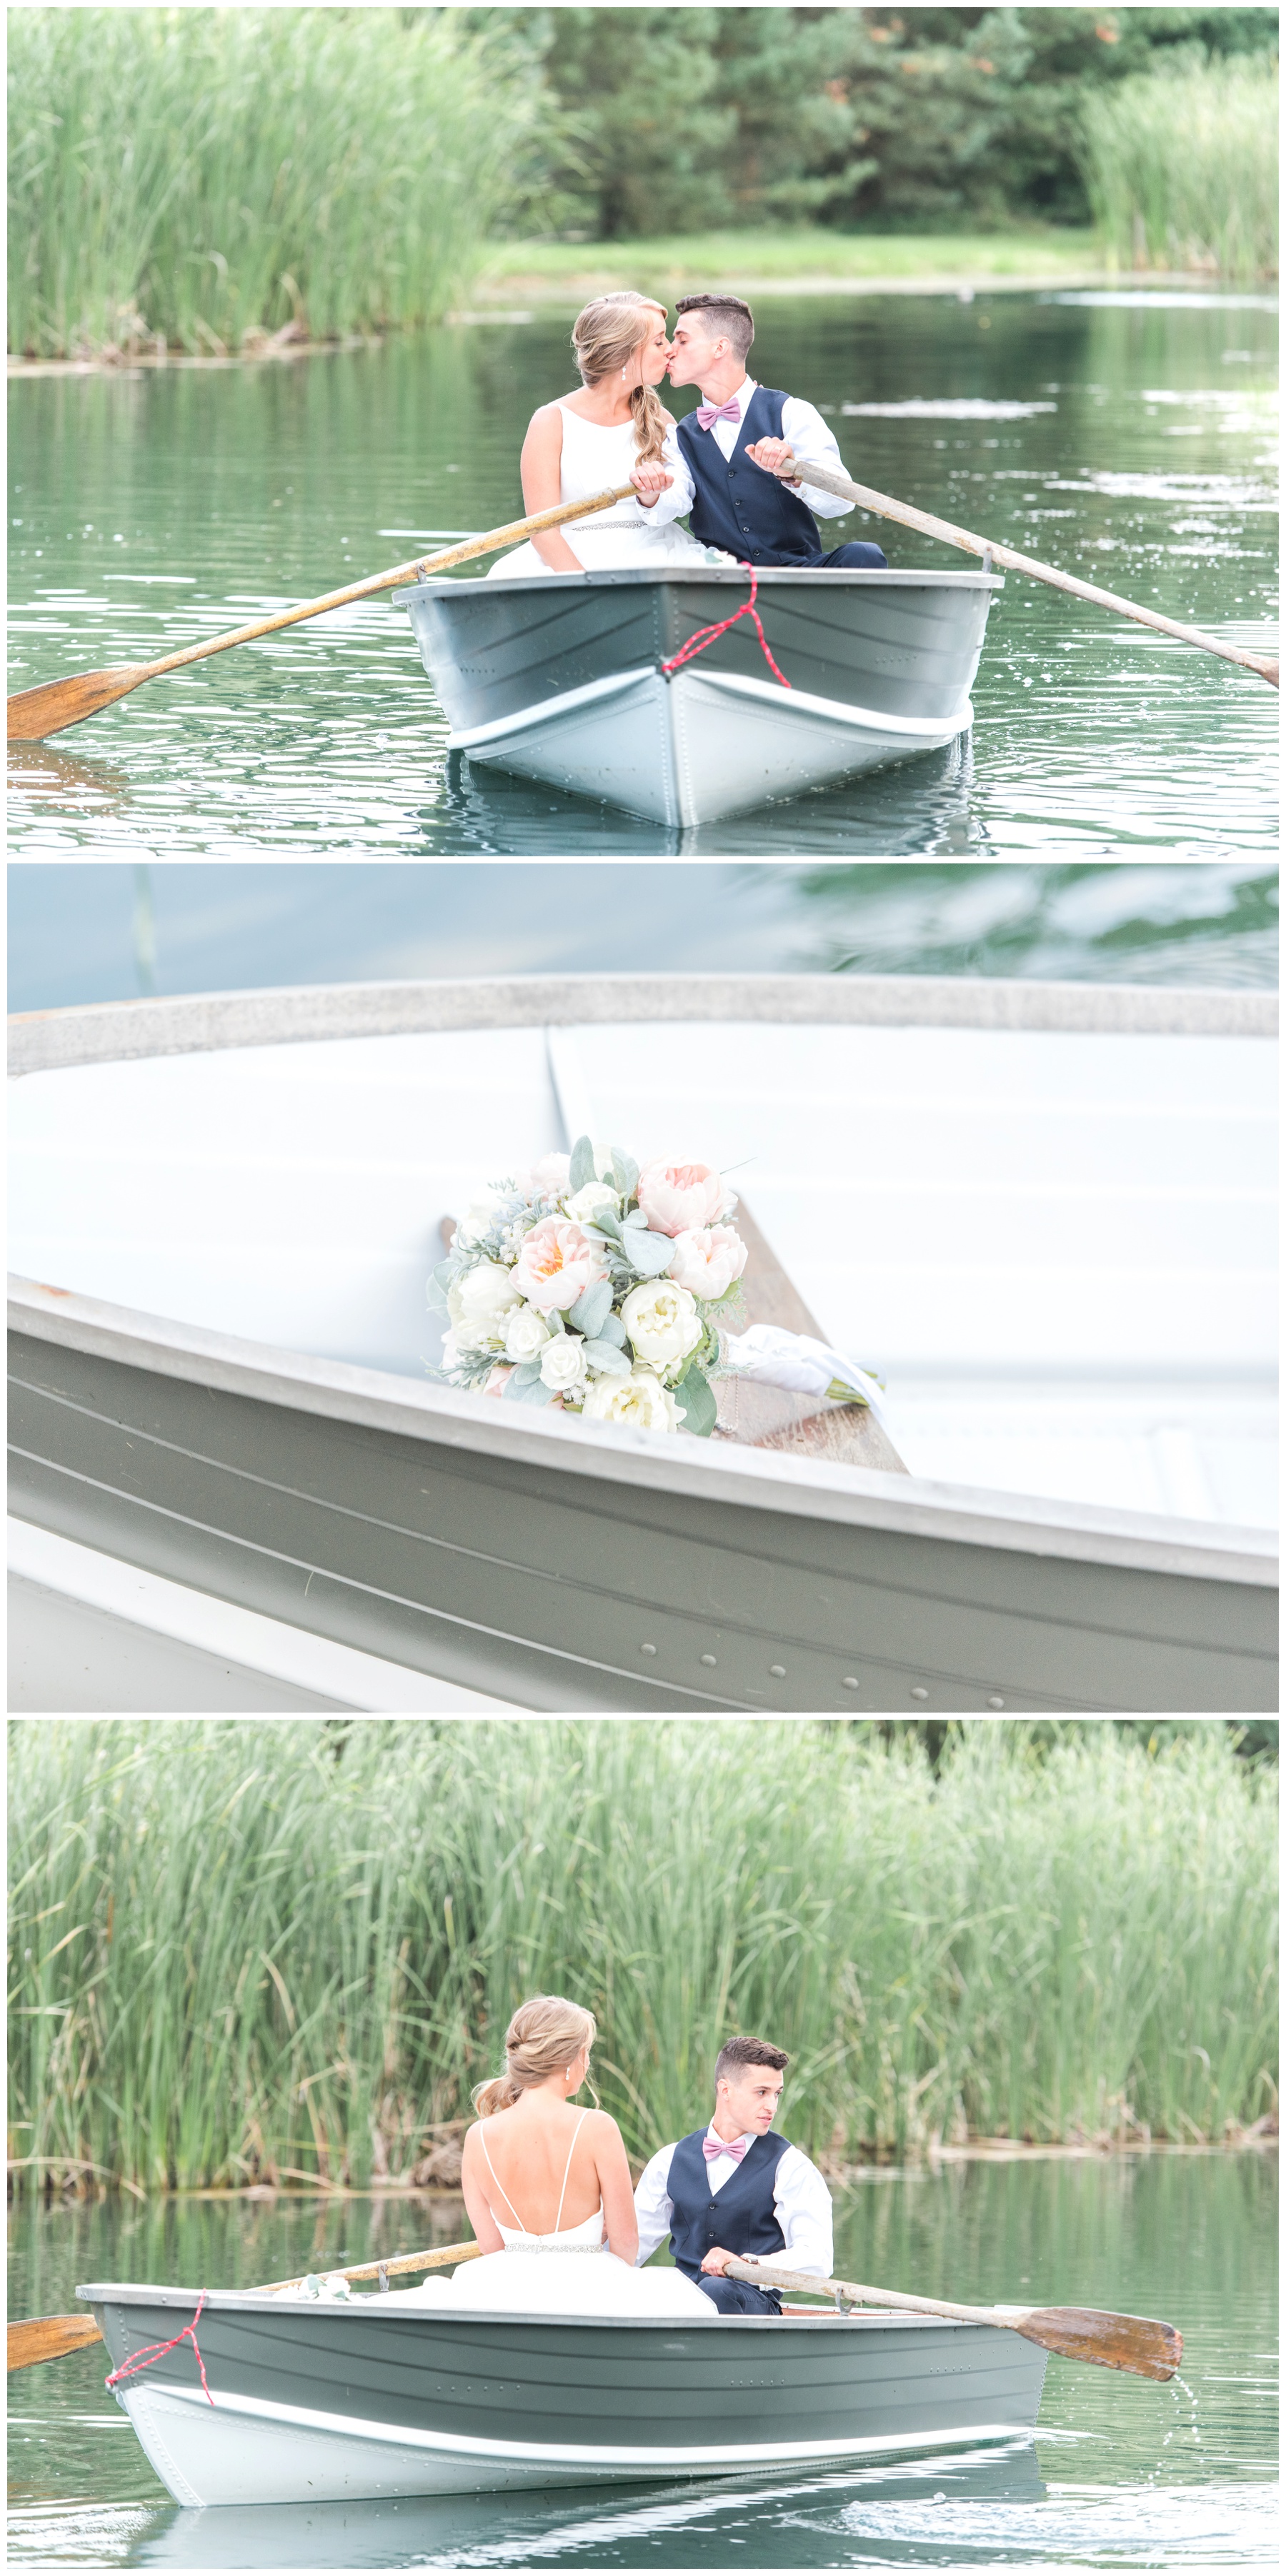 Wedding Day Boat Photo in Pond